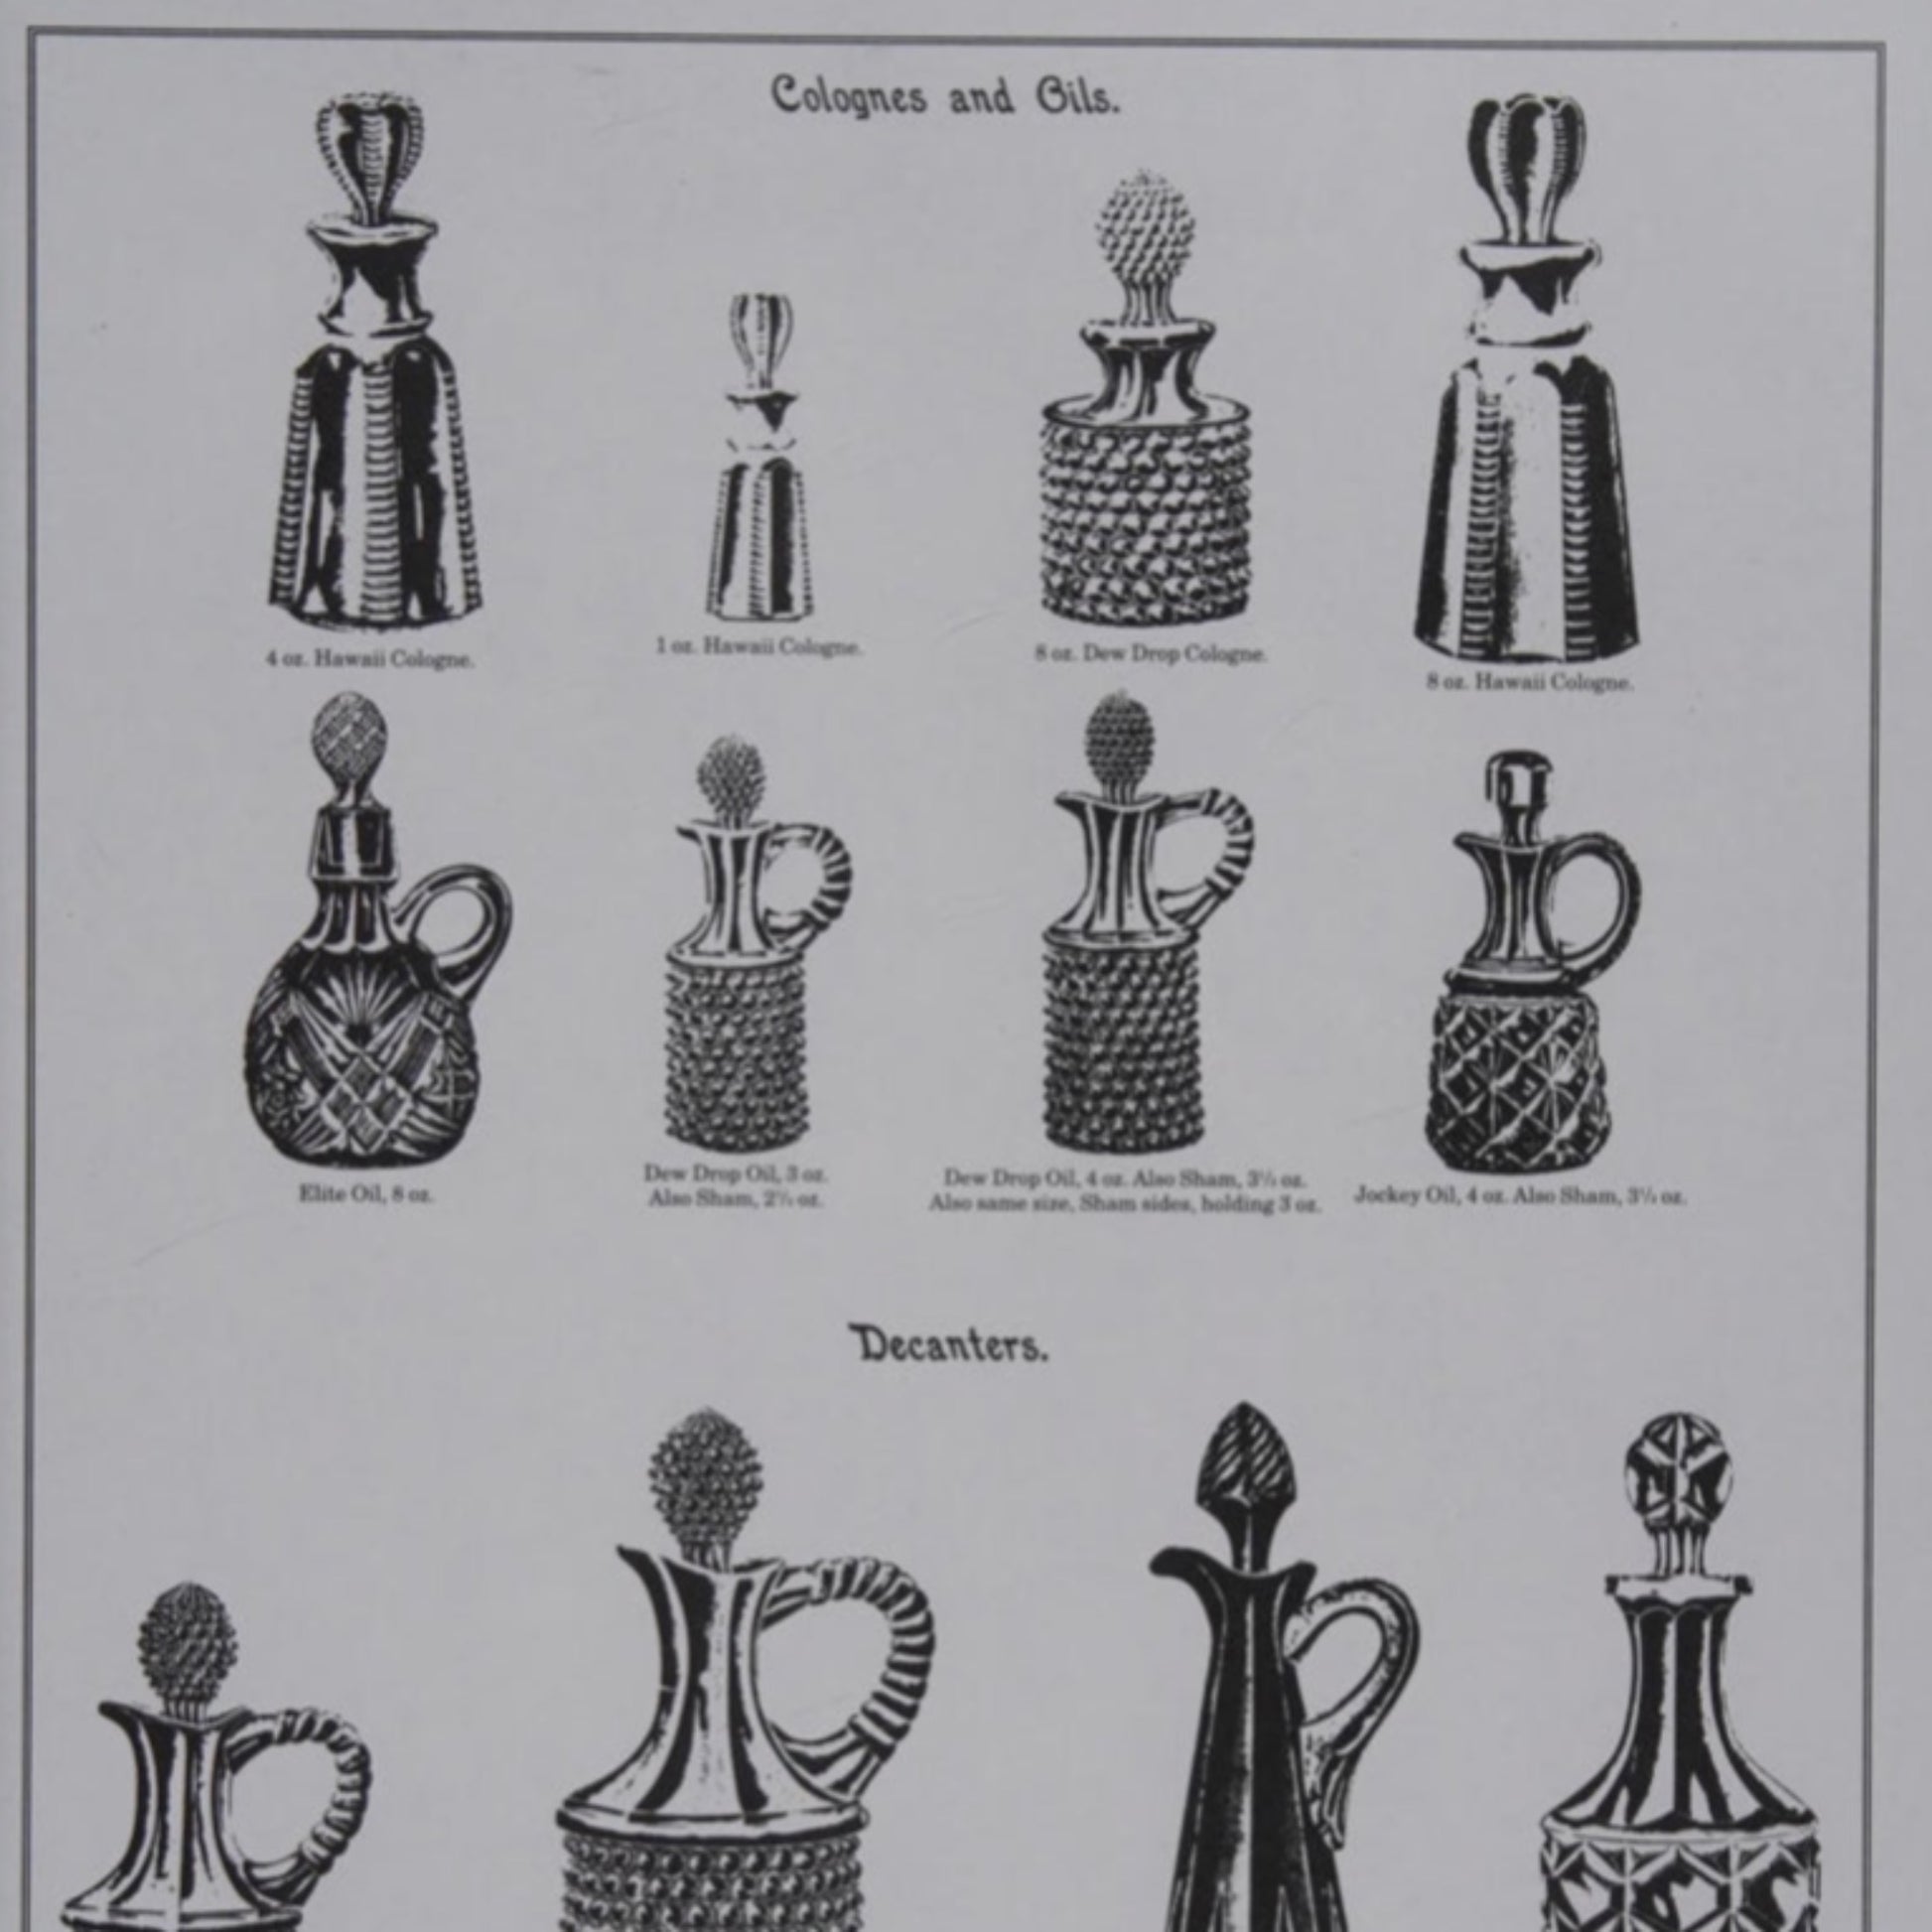 National Glass Company 1899 Catalog Page